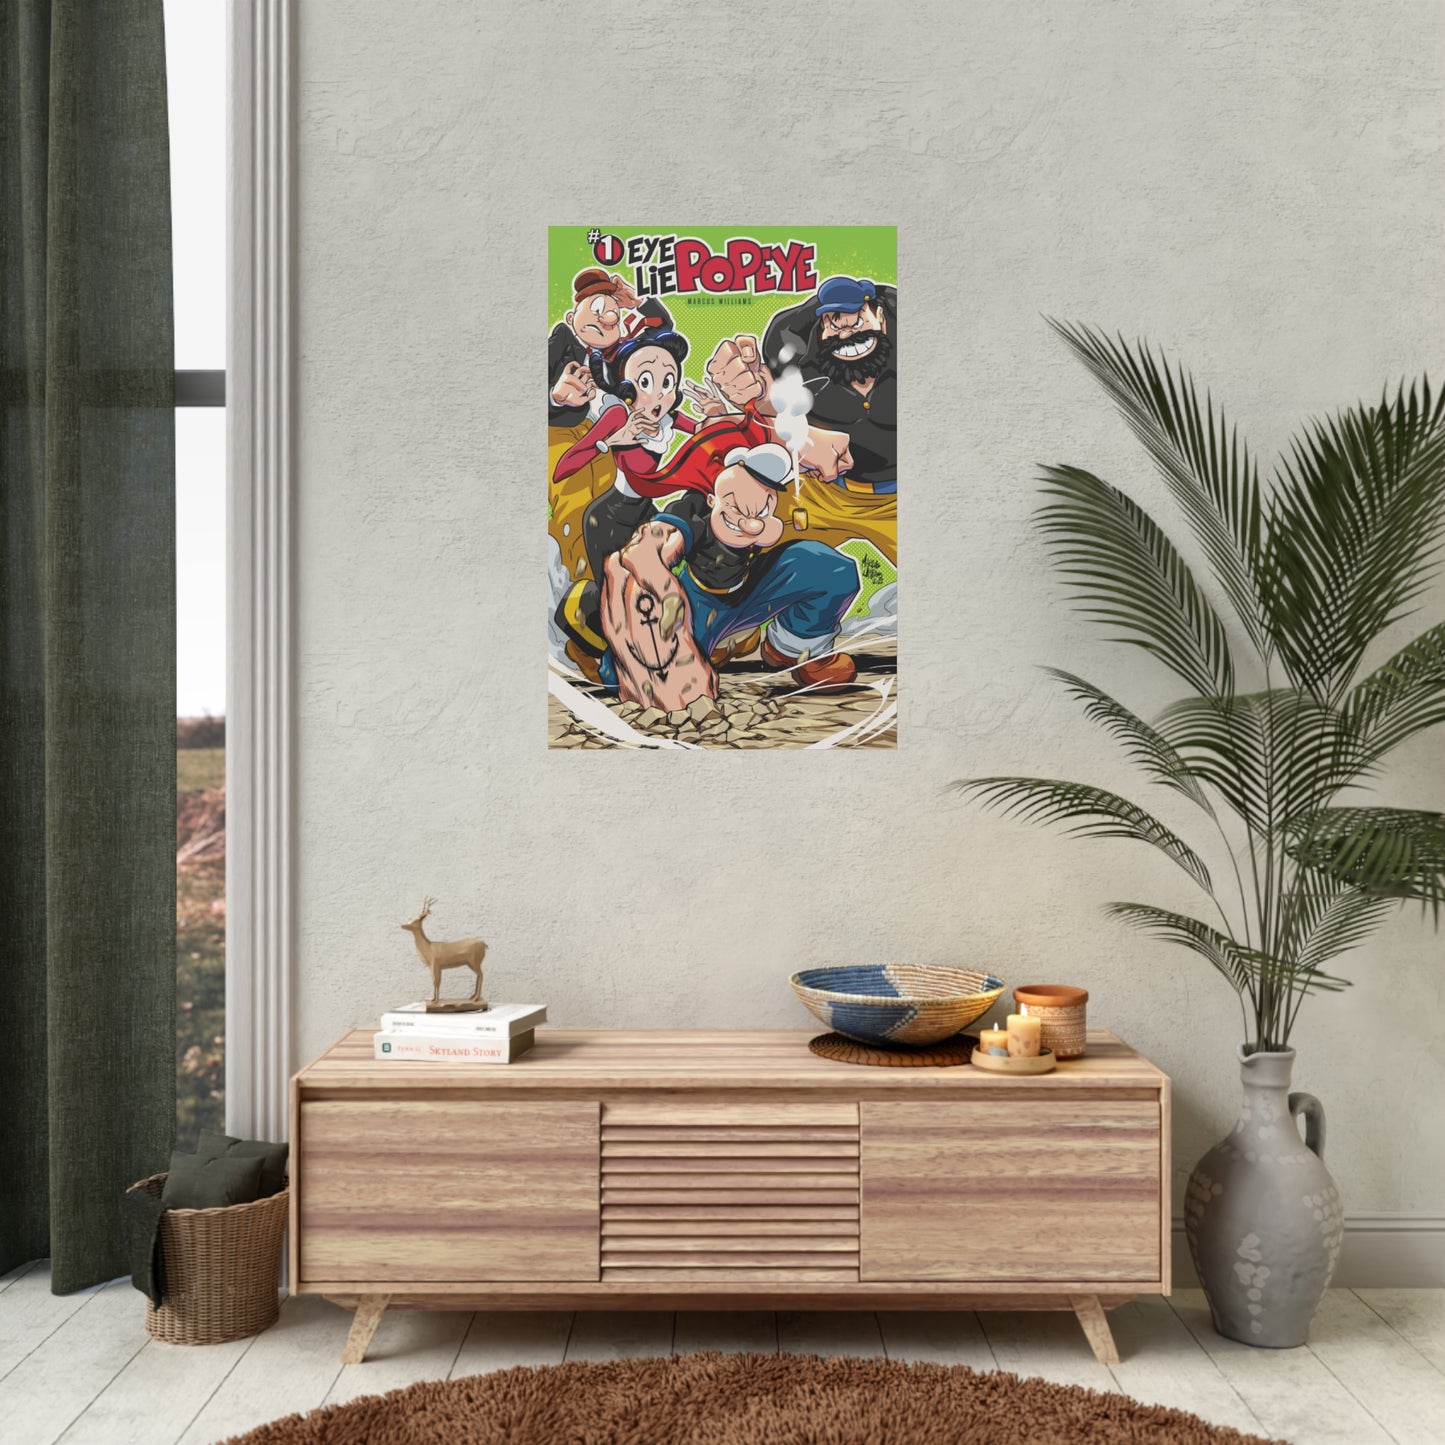 Eye Lie Popeye #1 Poster - Cover Variant 1 (24 x 36)